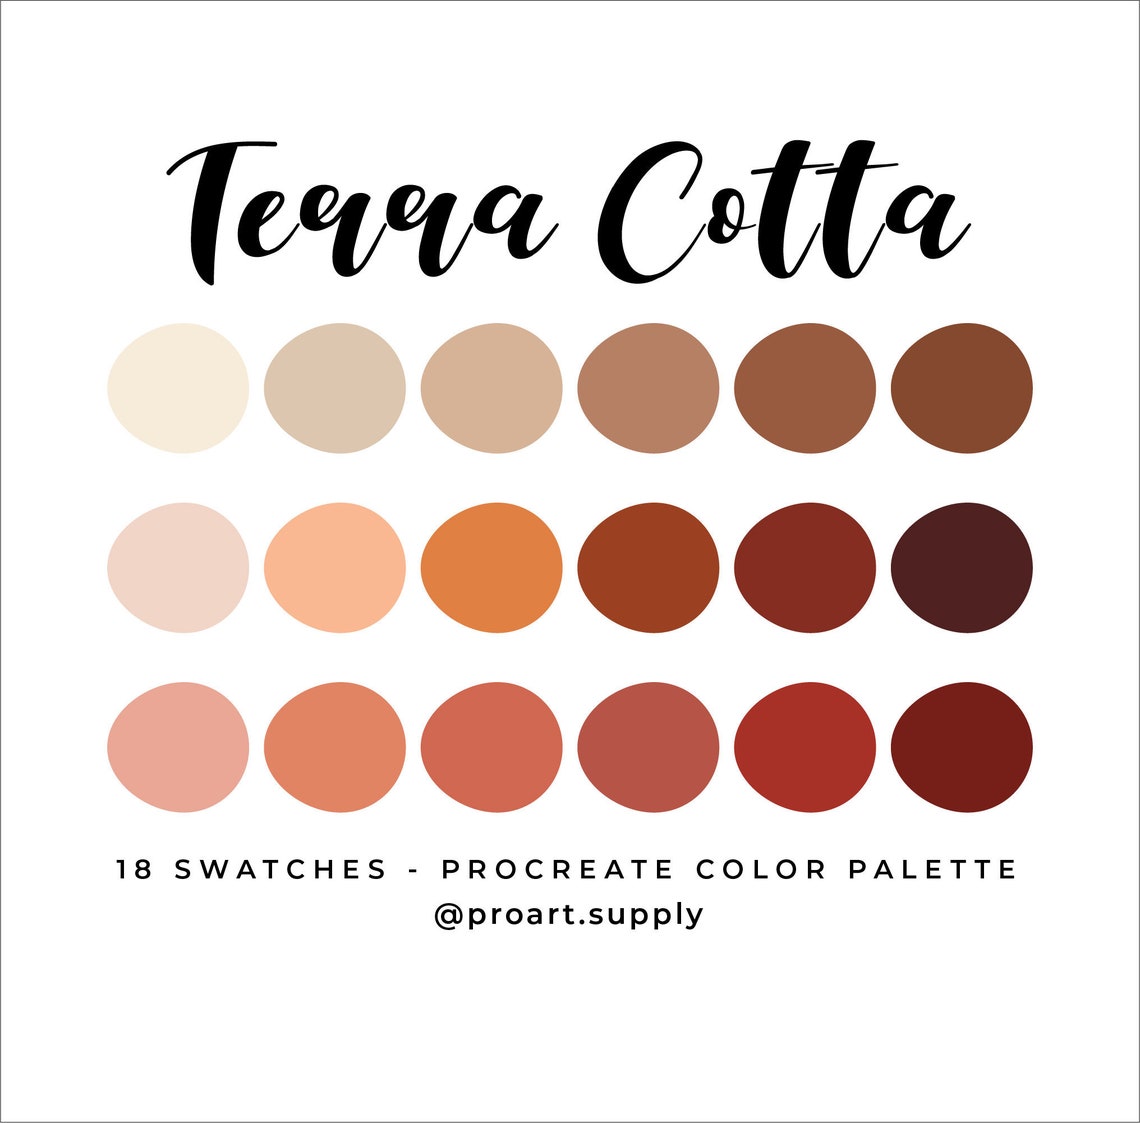 Terra Cotta Procreate Farbpalette Hex Codes Rot Orange Etsyde